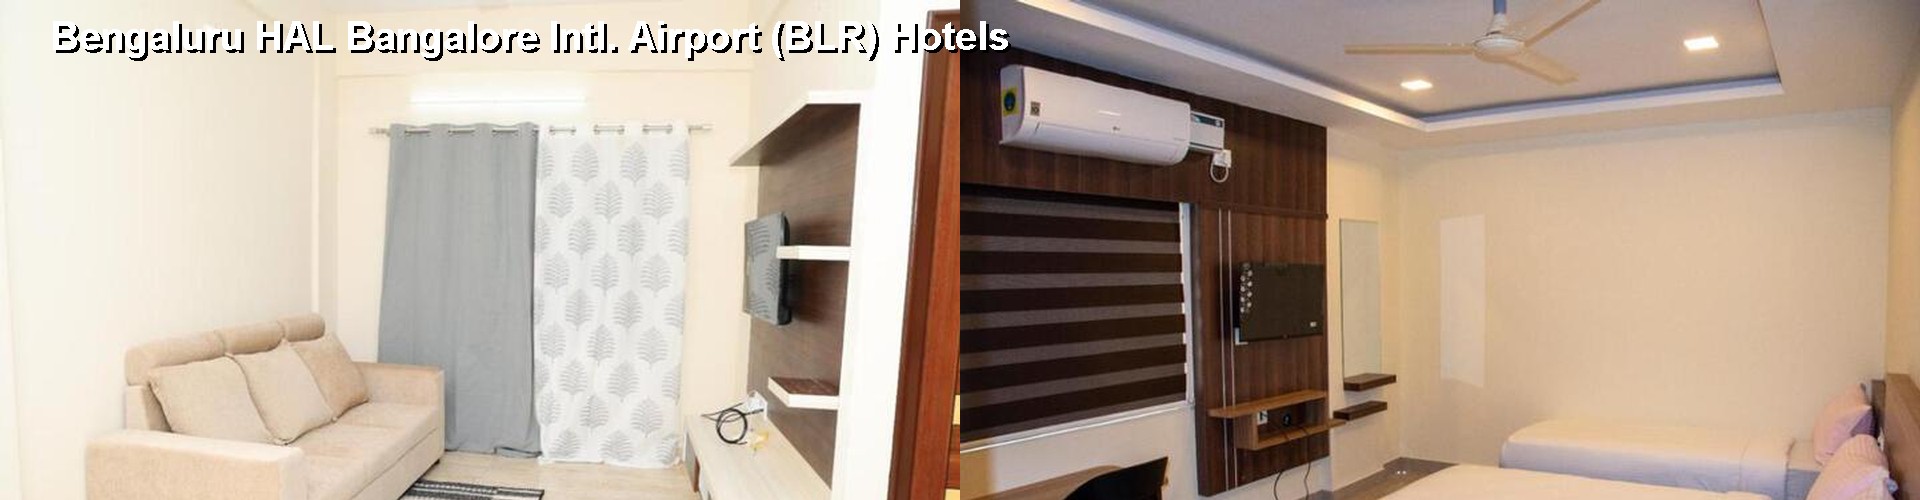 5 Best Hotels near Bengaluru HAL Bangalore Intl. Airport (BLR)